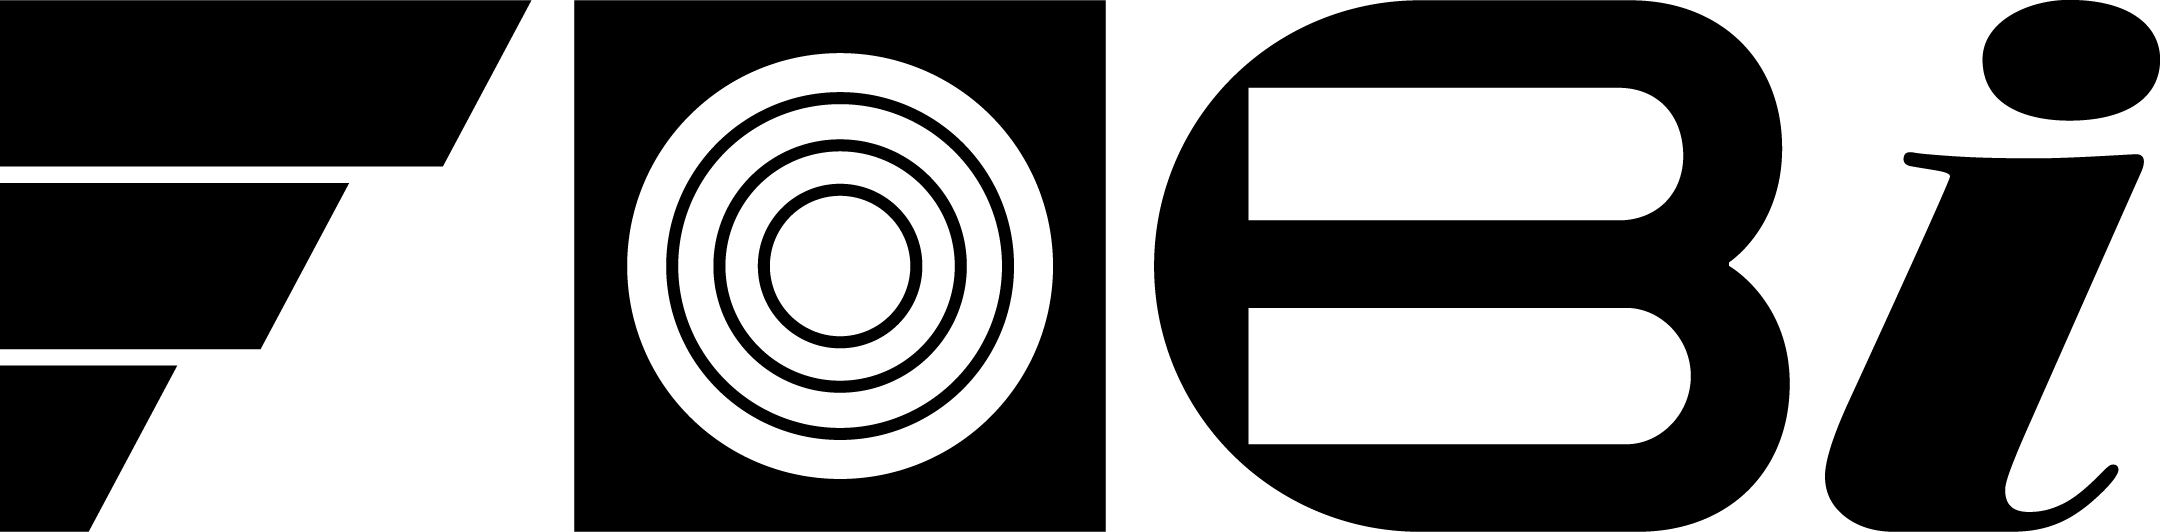 FOBI logo black